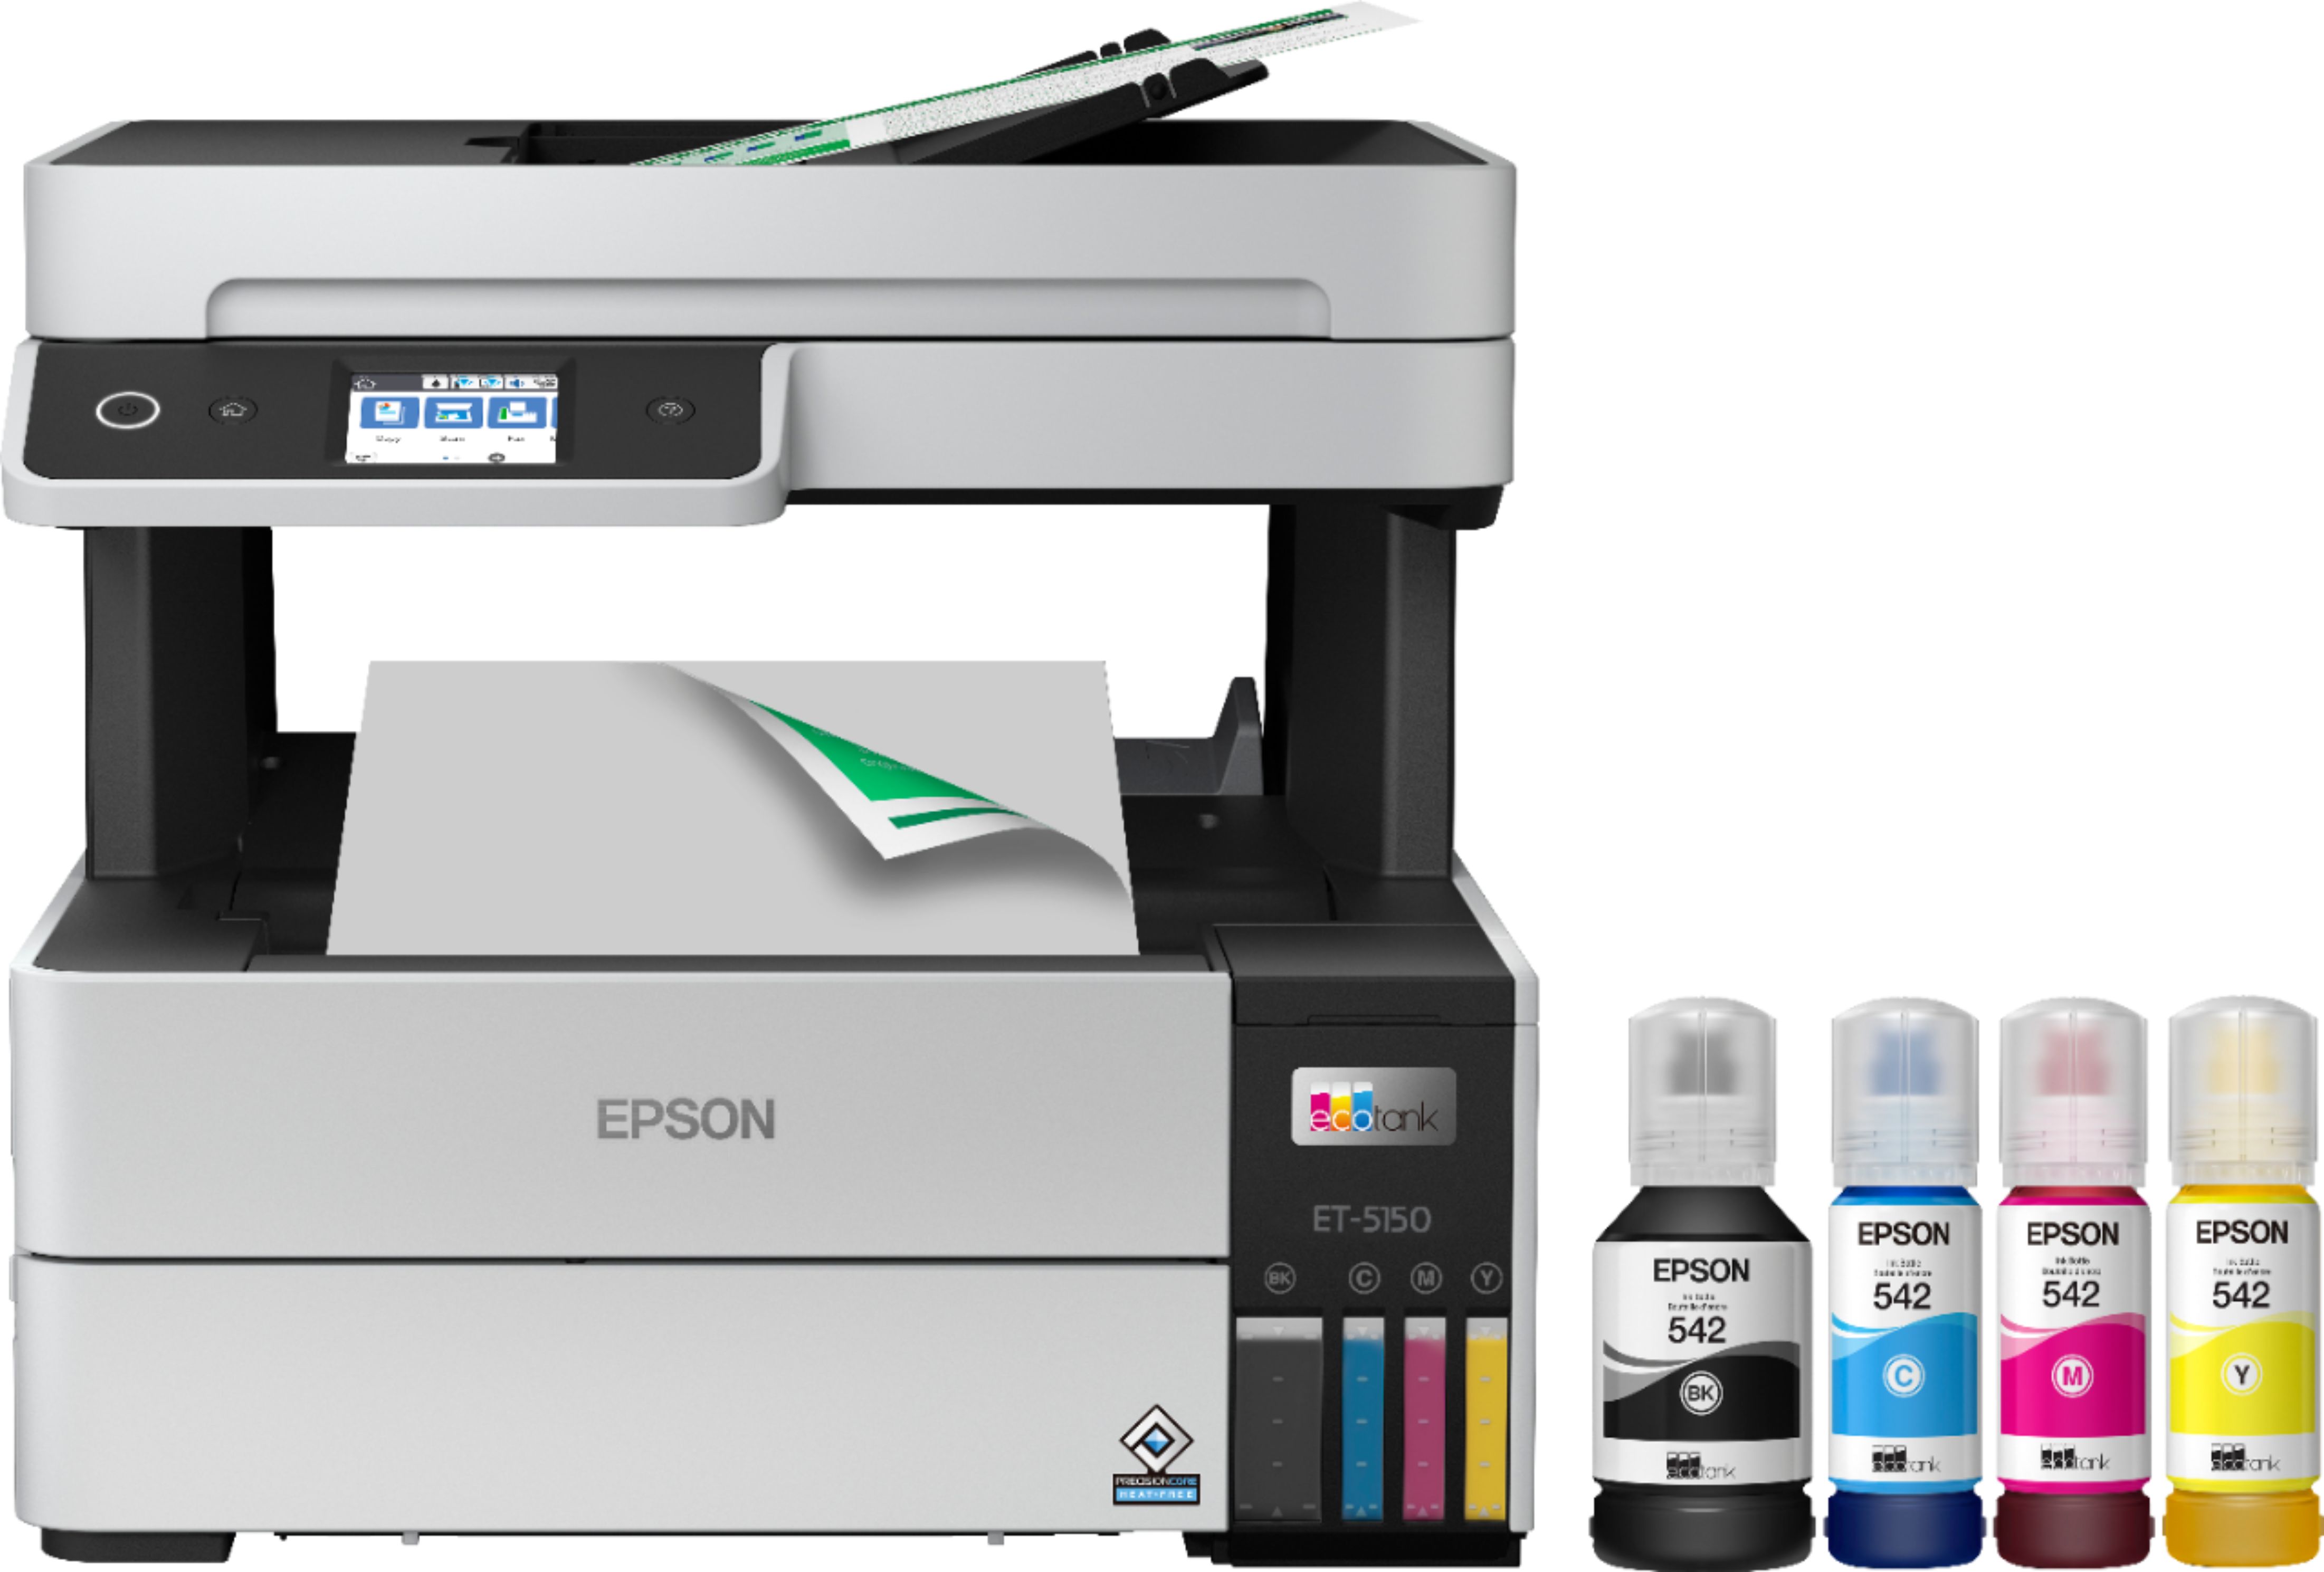 Epson Printer - electronics - by owner - sale - craigslist